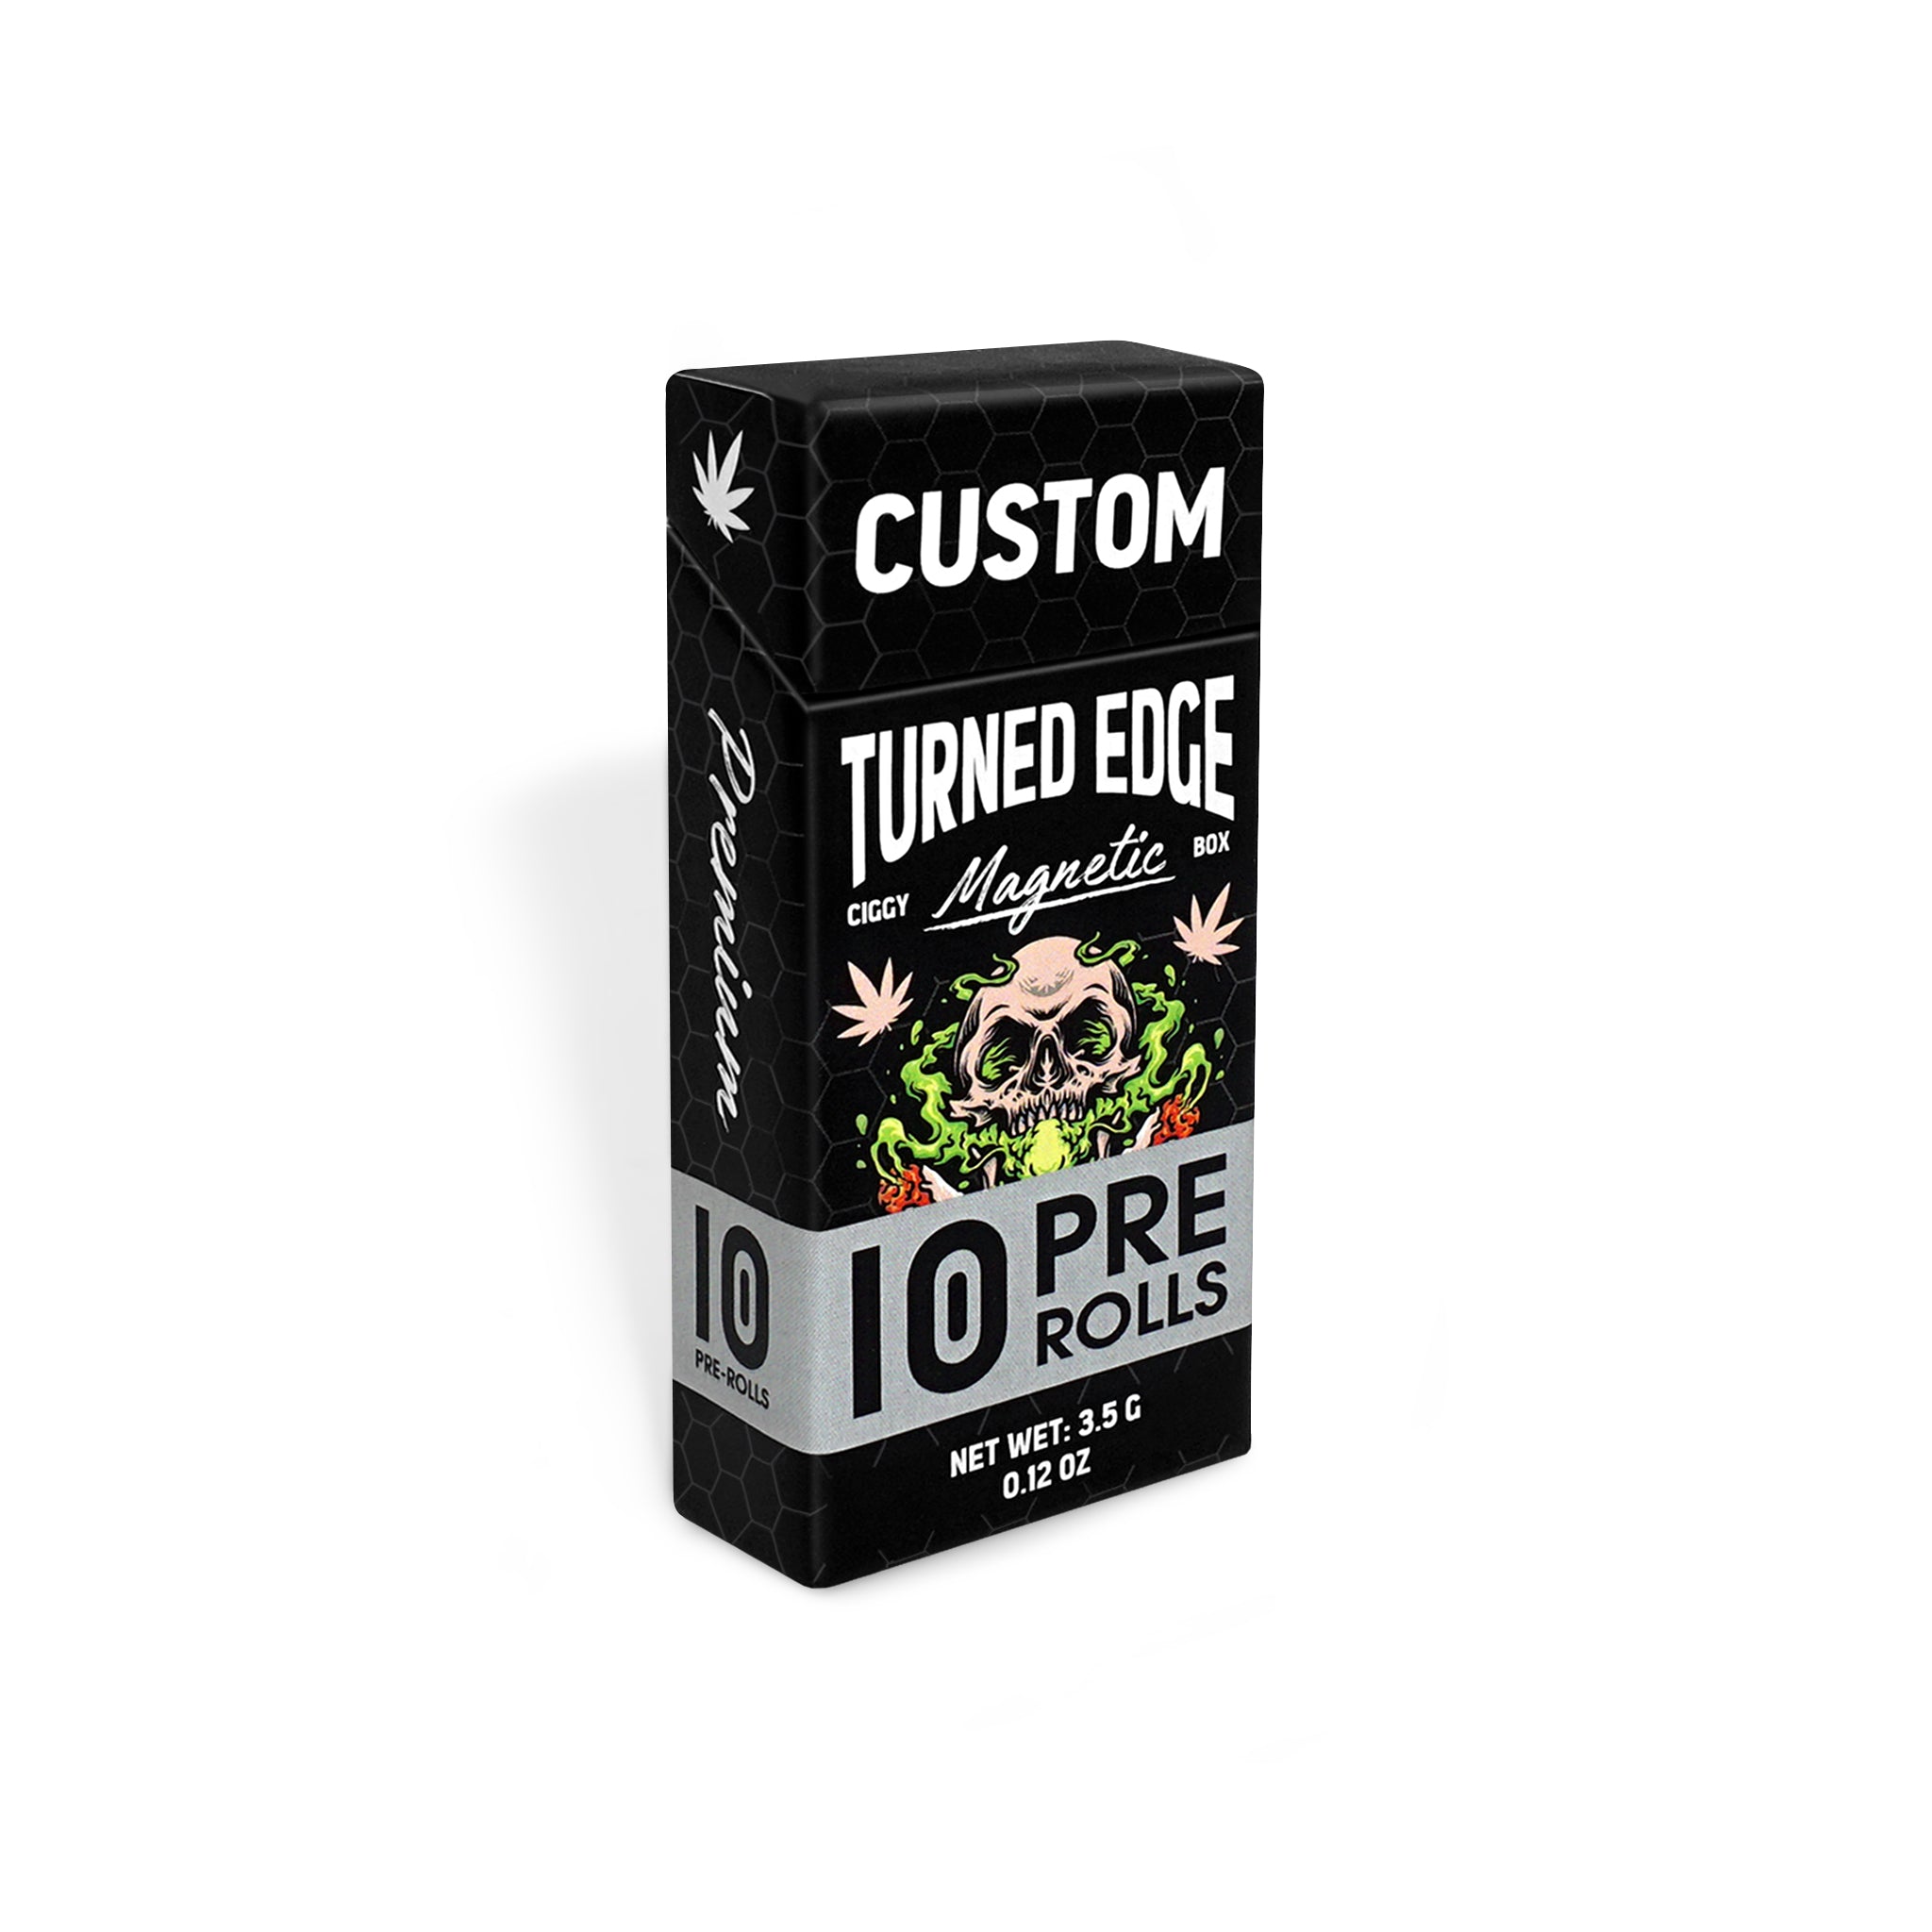 Custom Turned Edge Magnetic Ciggy Box